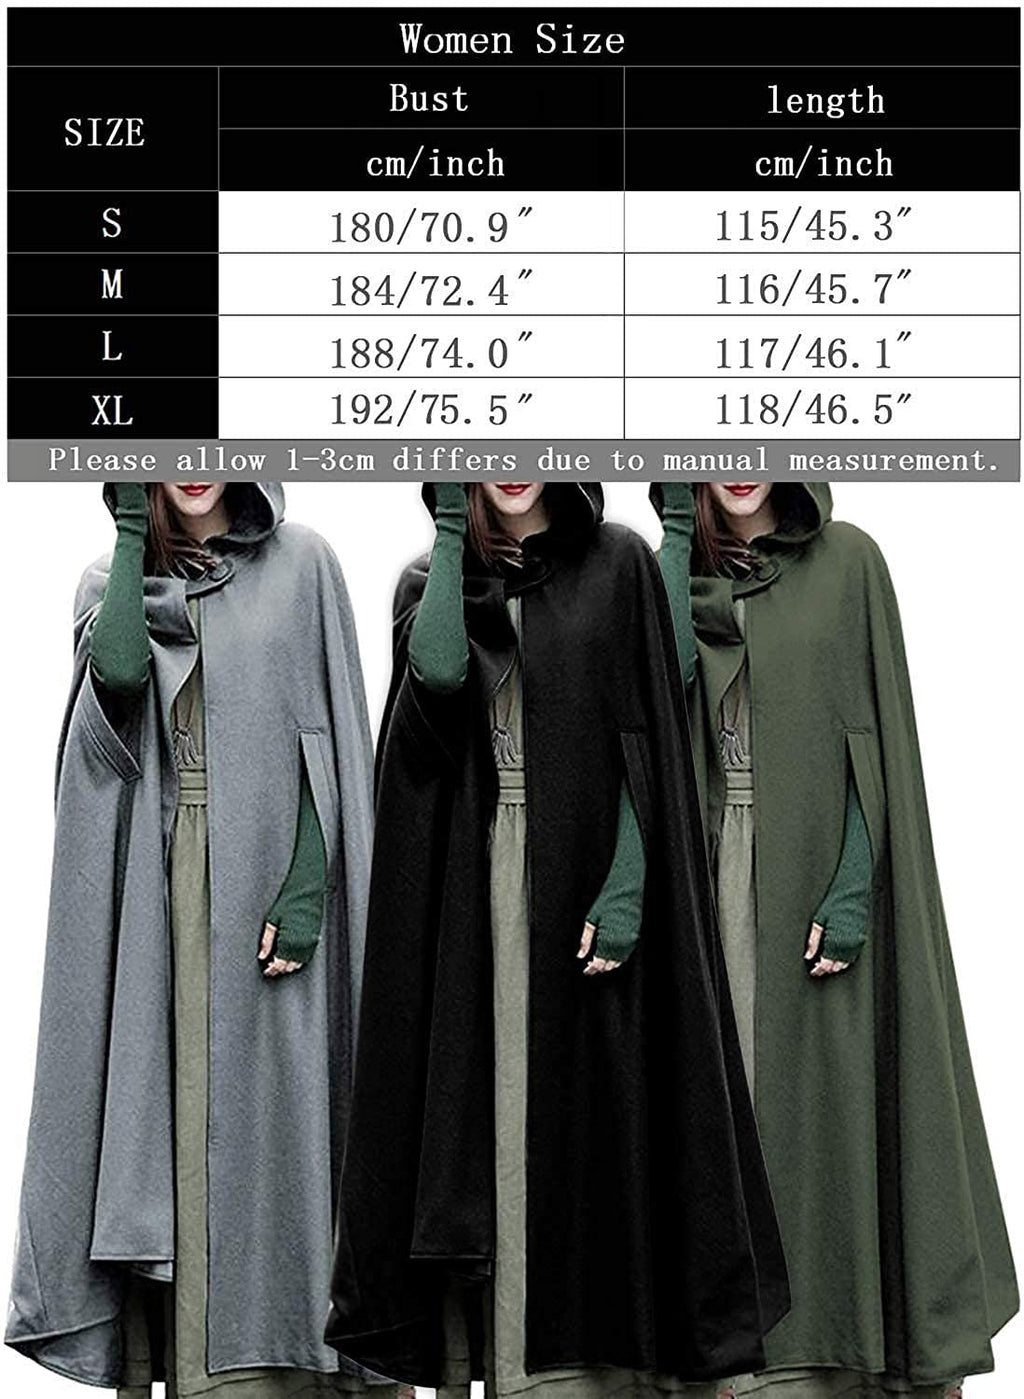 futurino Women Gothic Hooded Open Front Poncho Cape Coat Outwear Jacket Cloak Black M